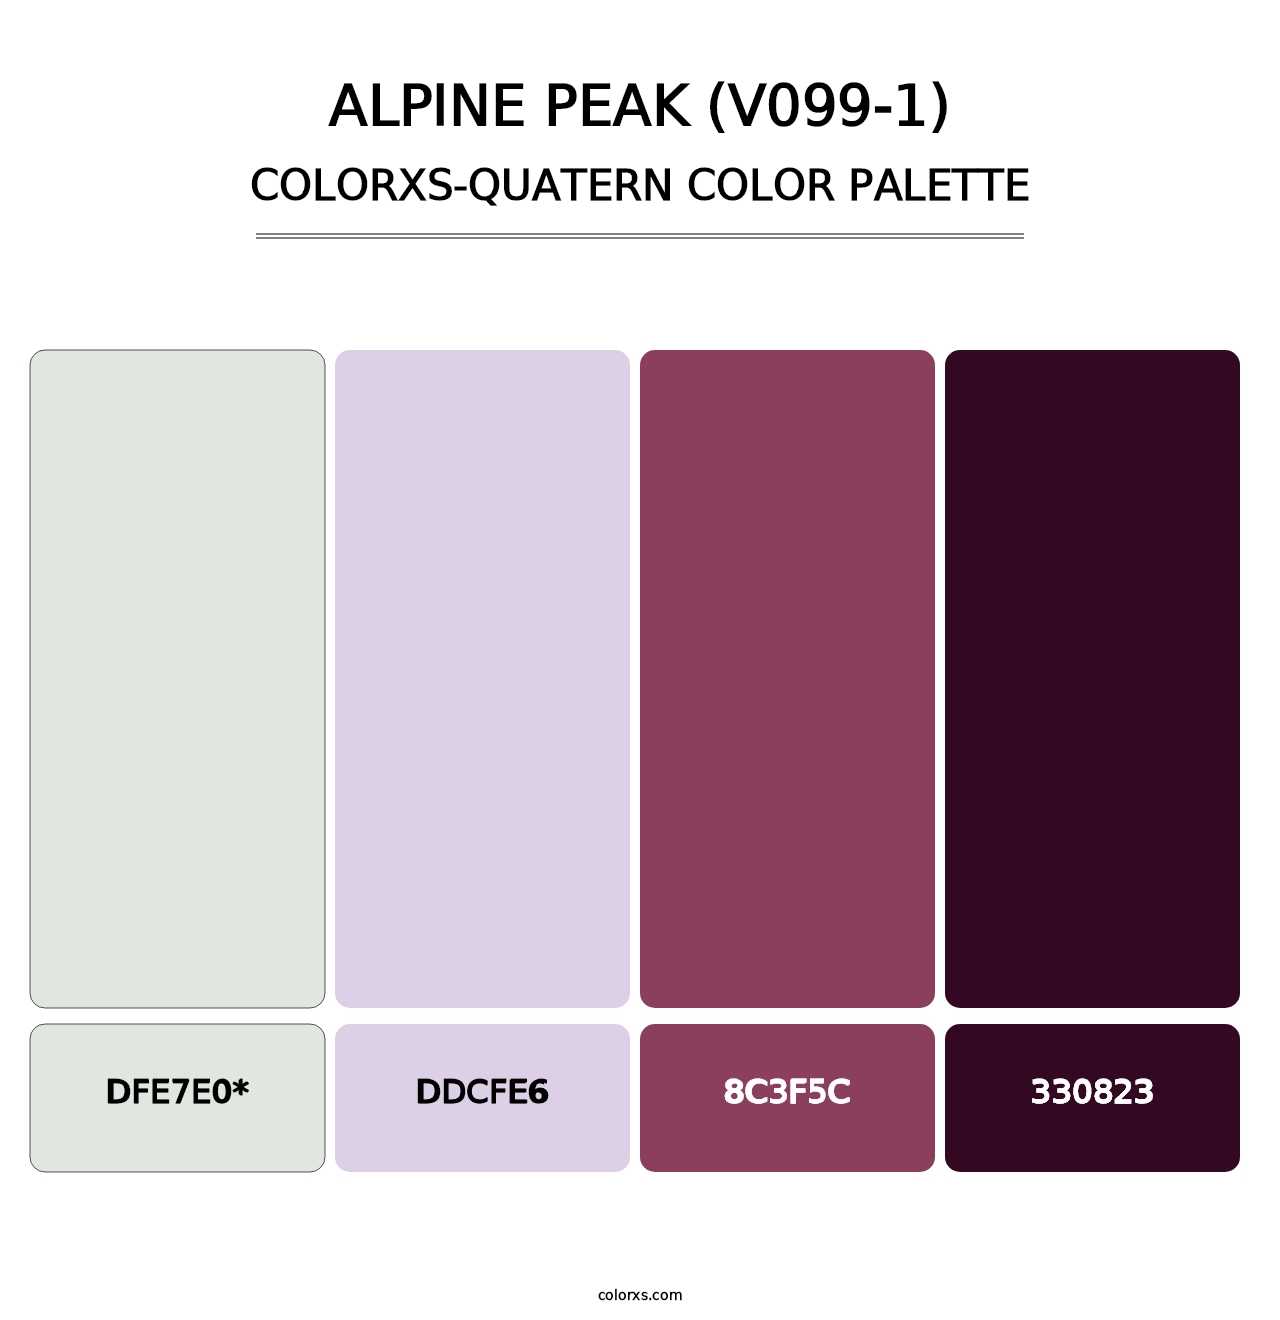 Alpine Peak (V099-1) - Colorxs Quatern Palette